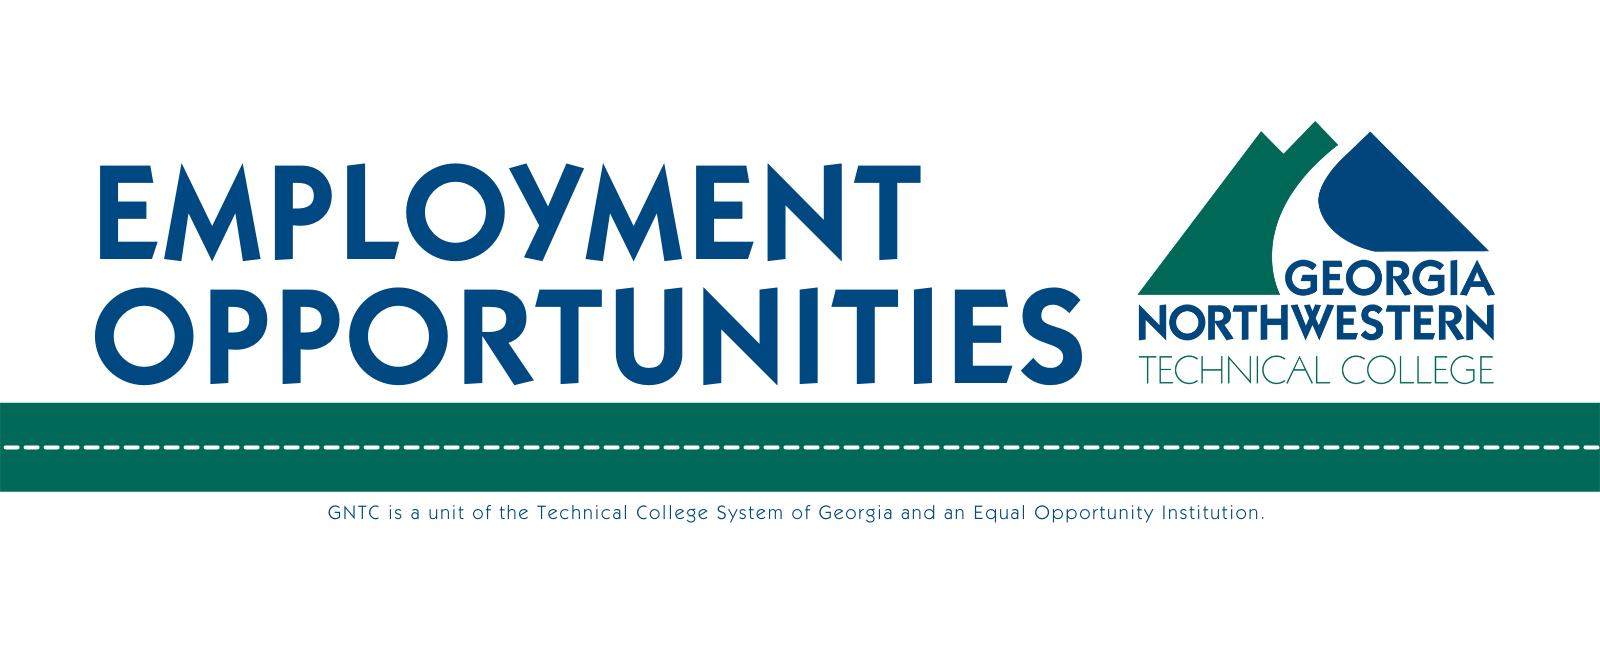 Employment Opportunities at app